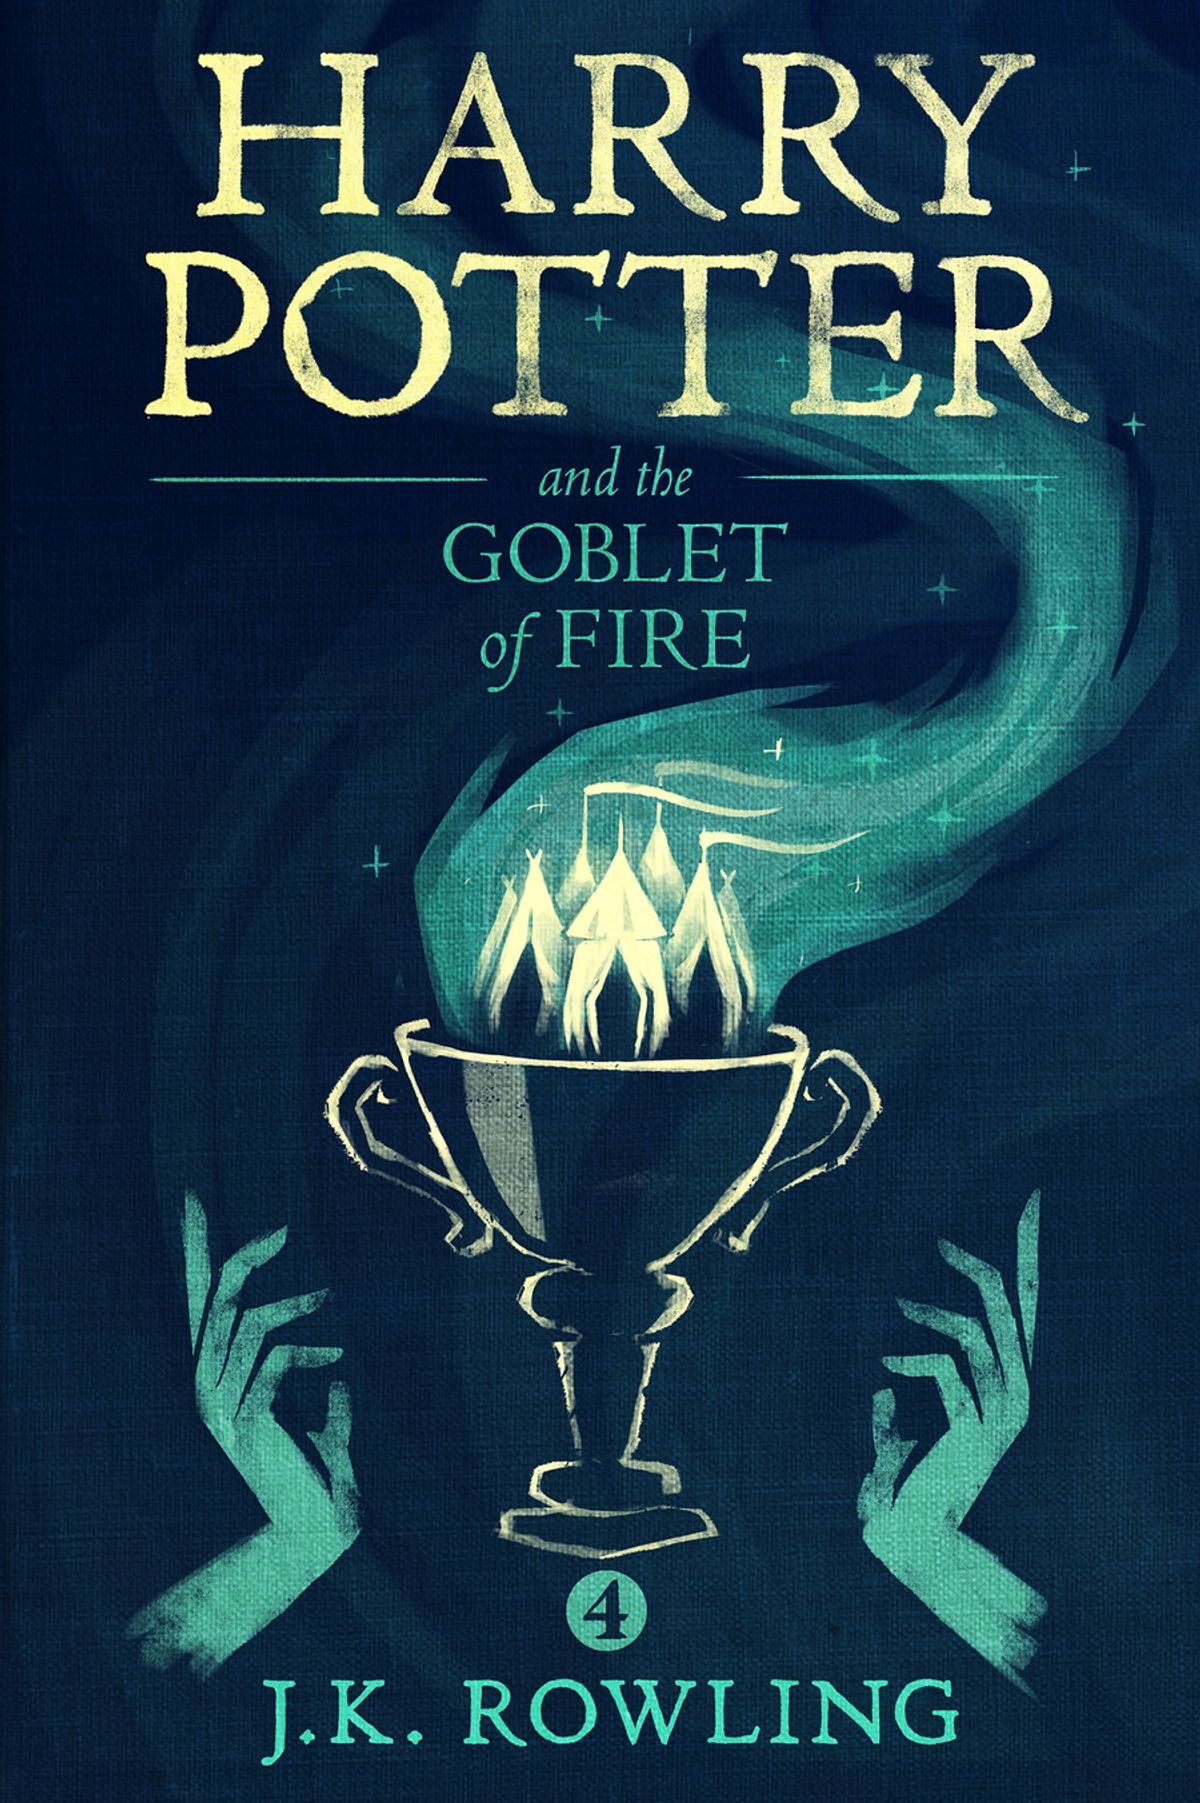 goblet of fire pdf download